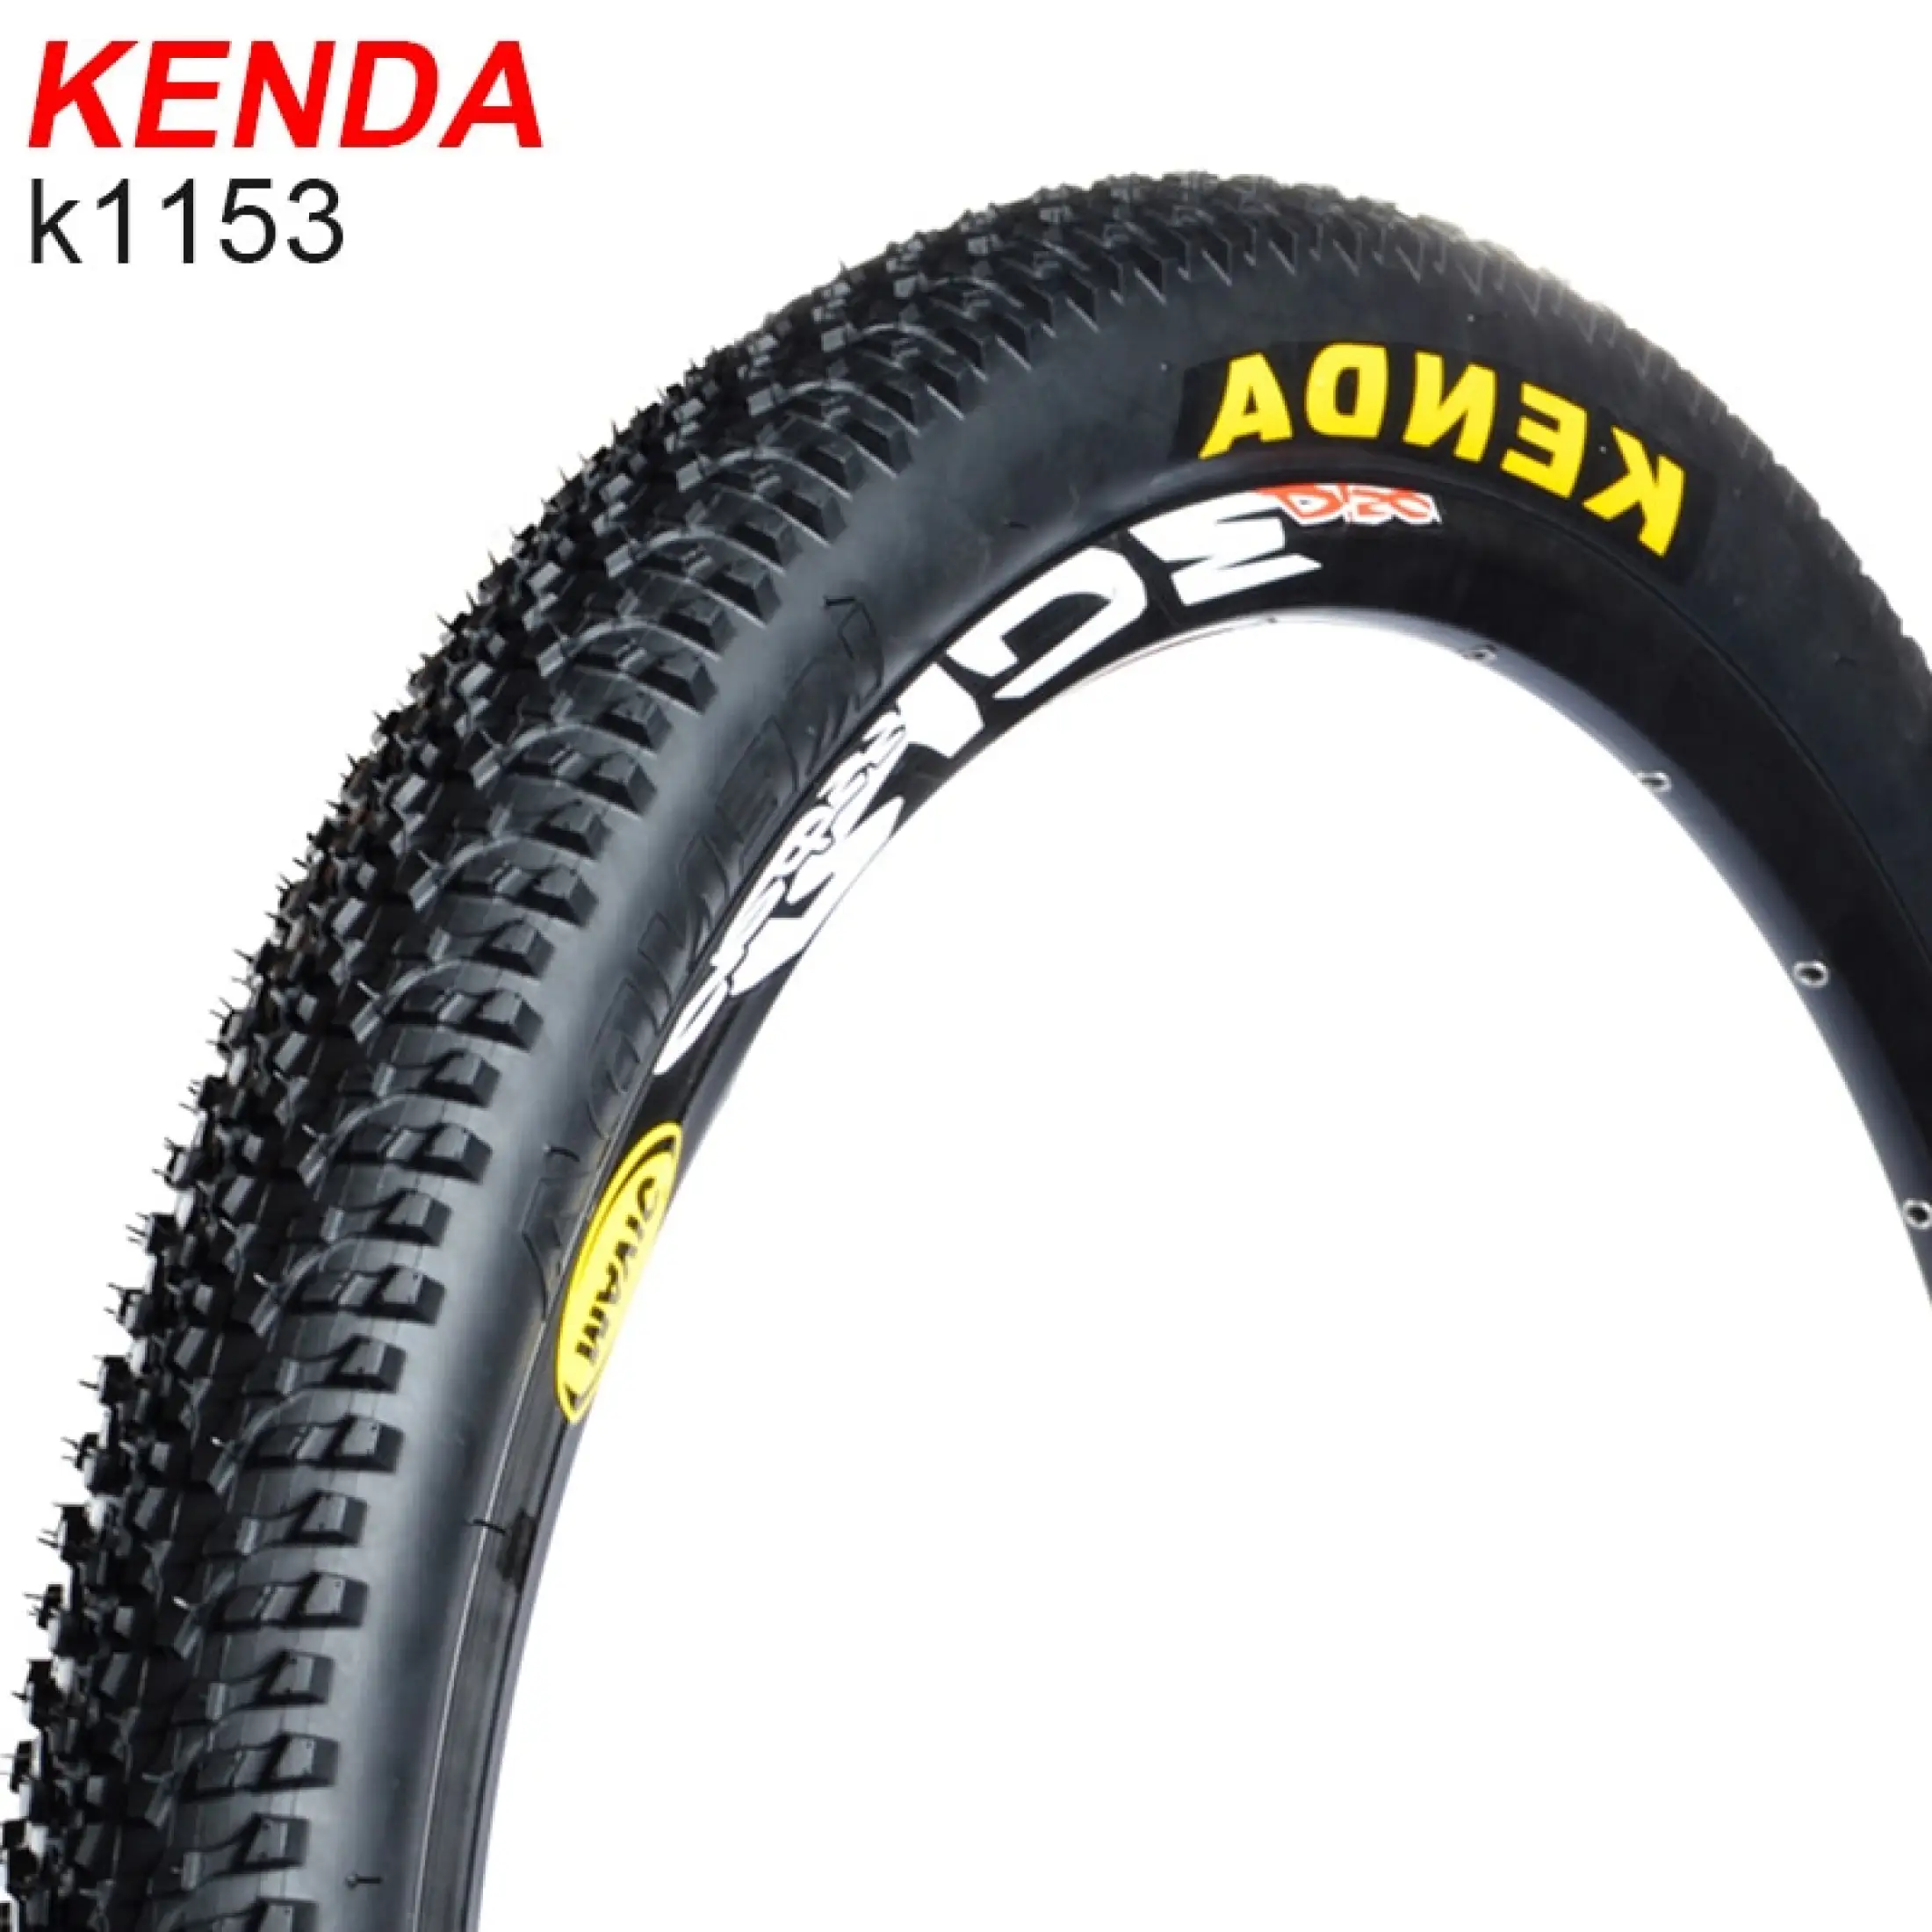 27.5 inch mountain bike tires